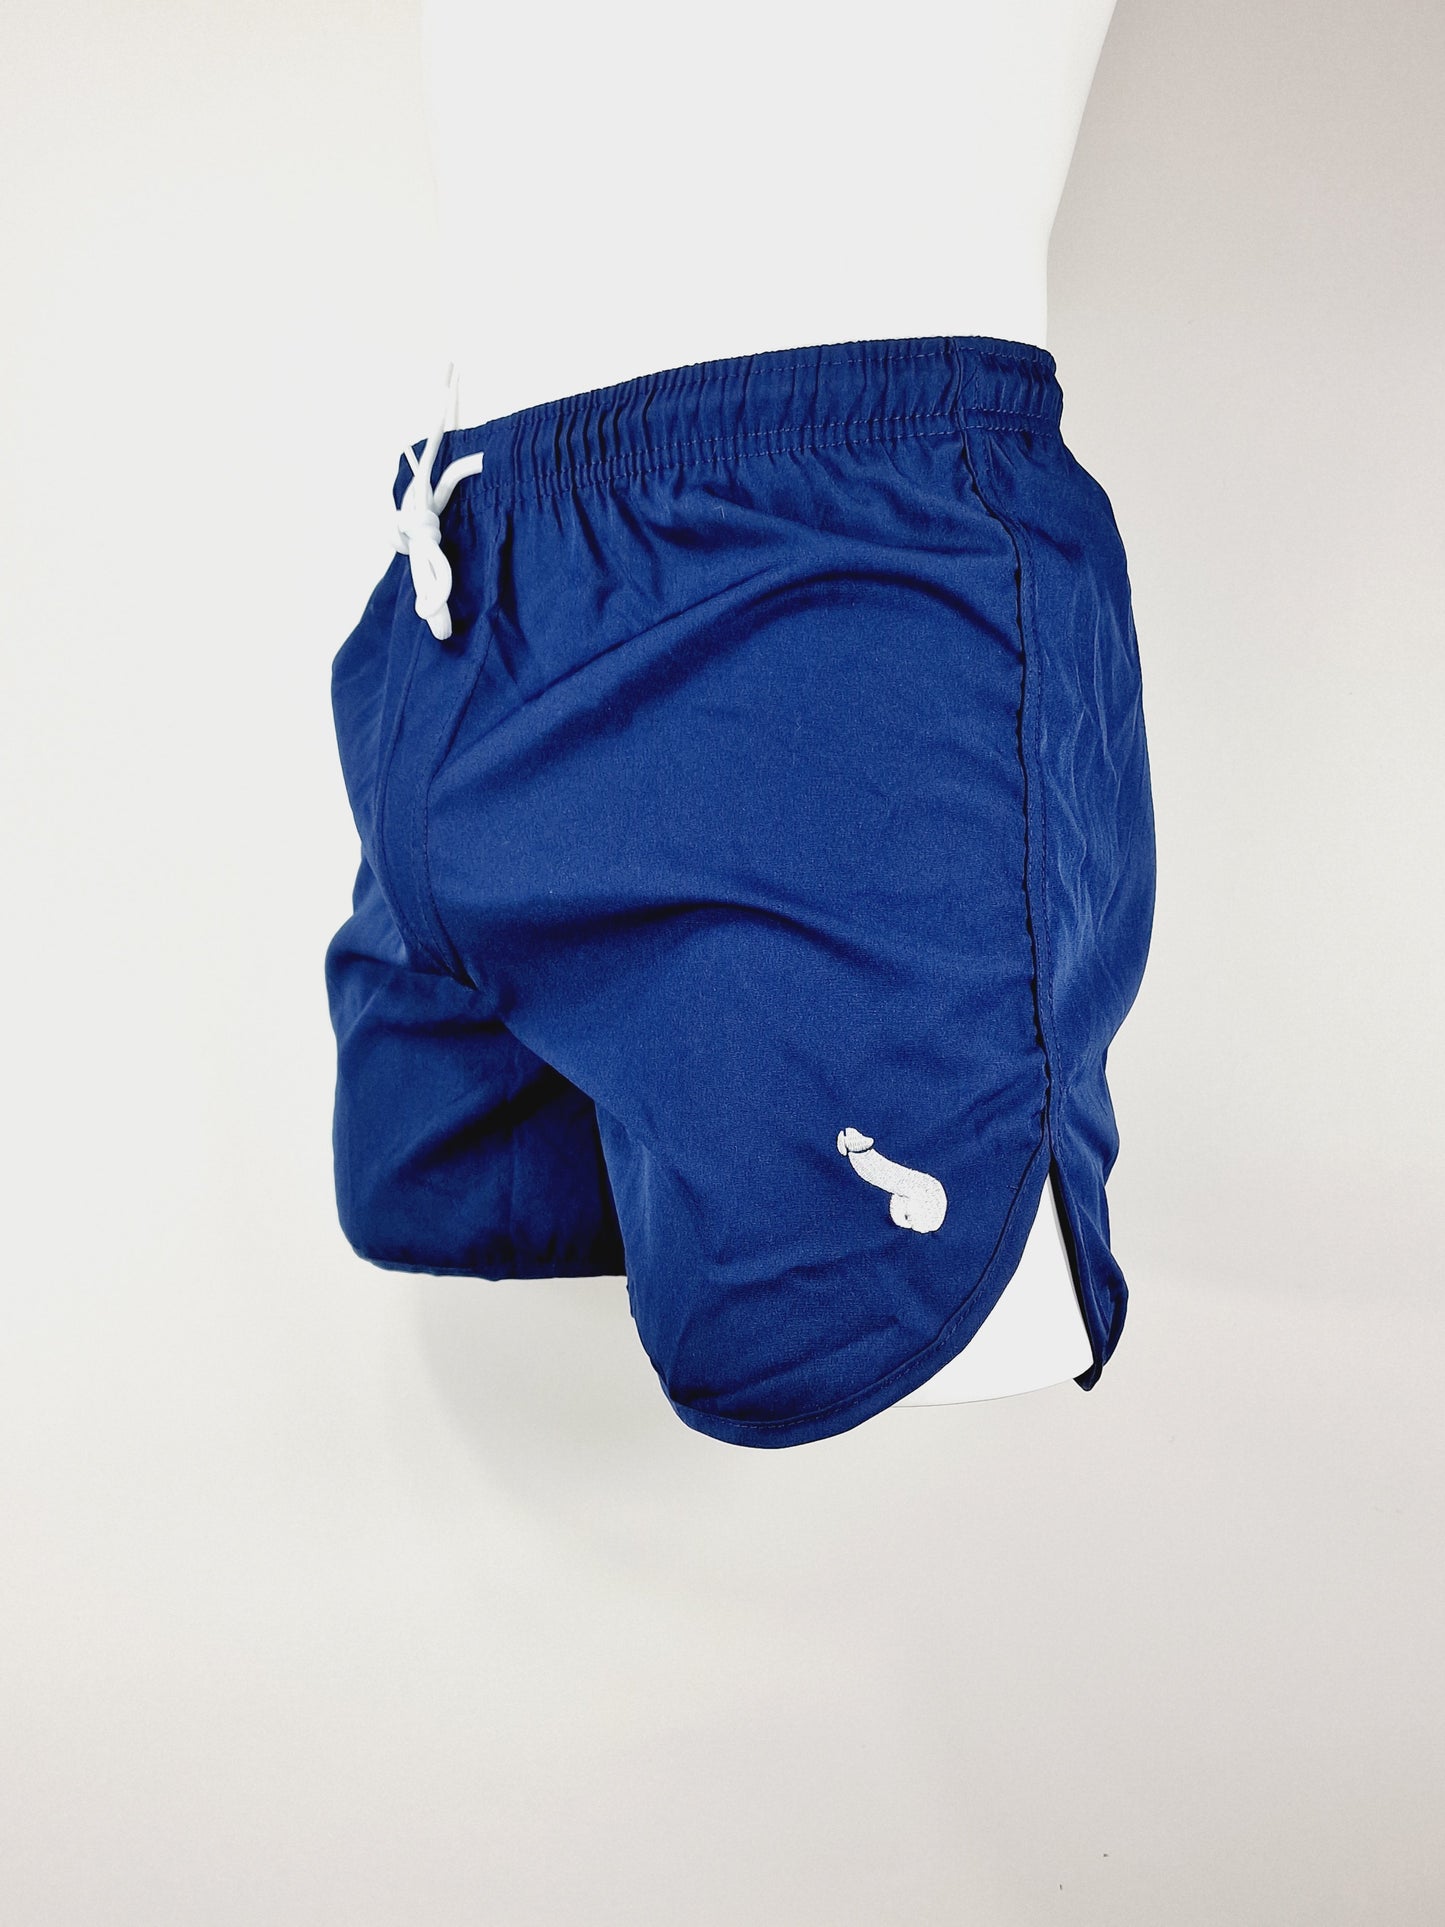 Thin & cool shorts - Navy blue